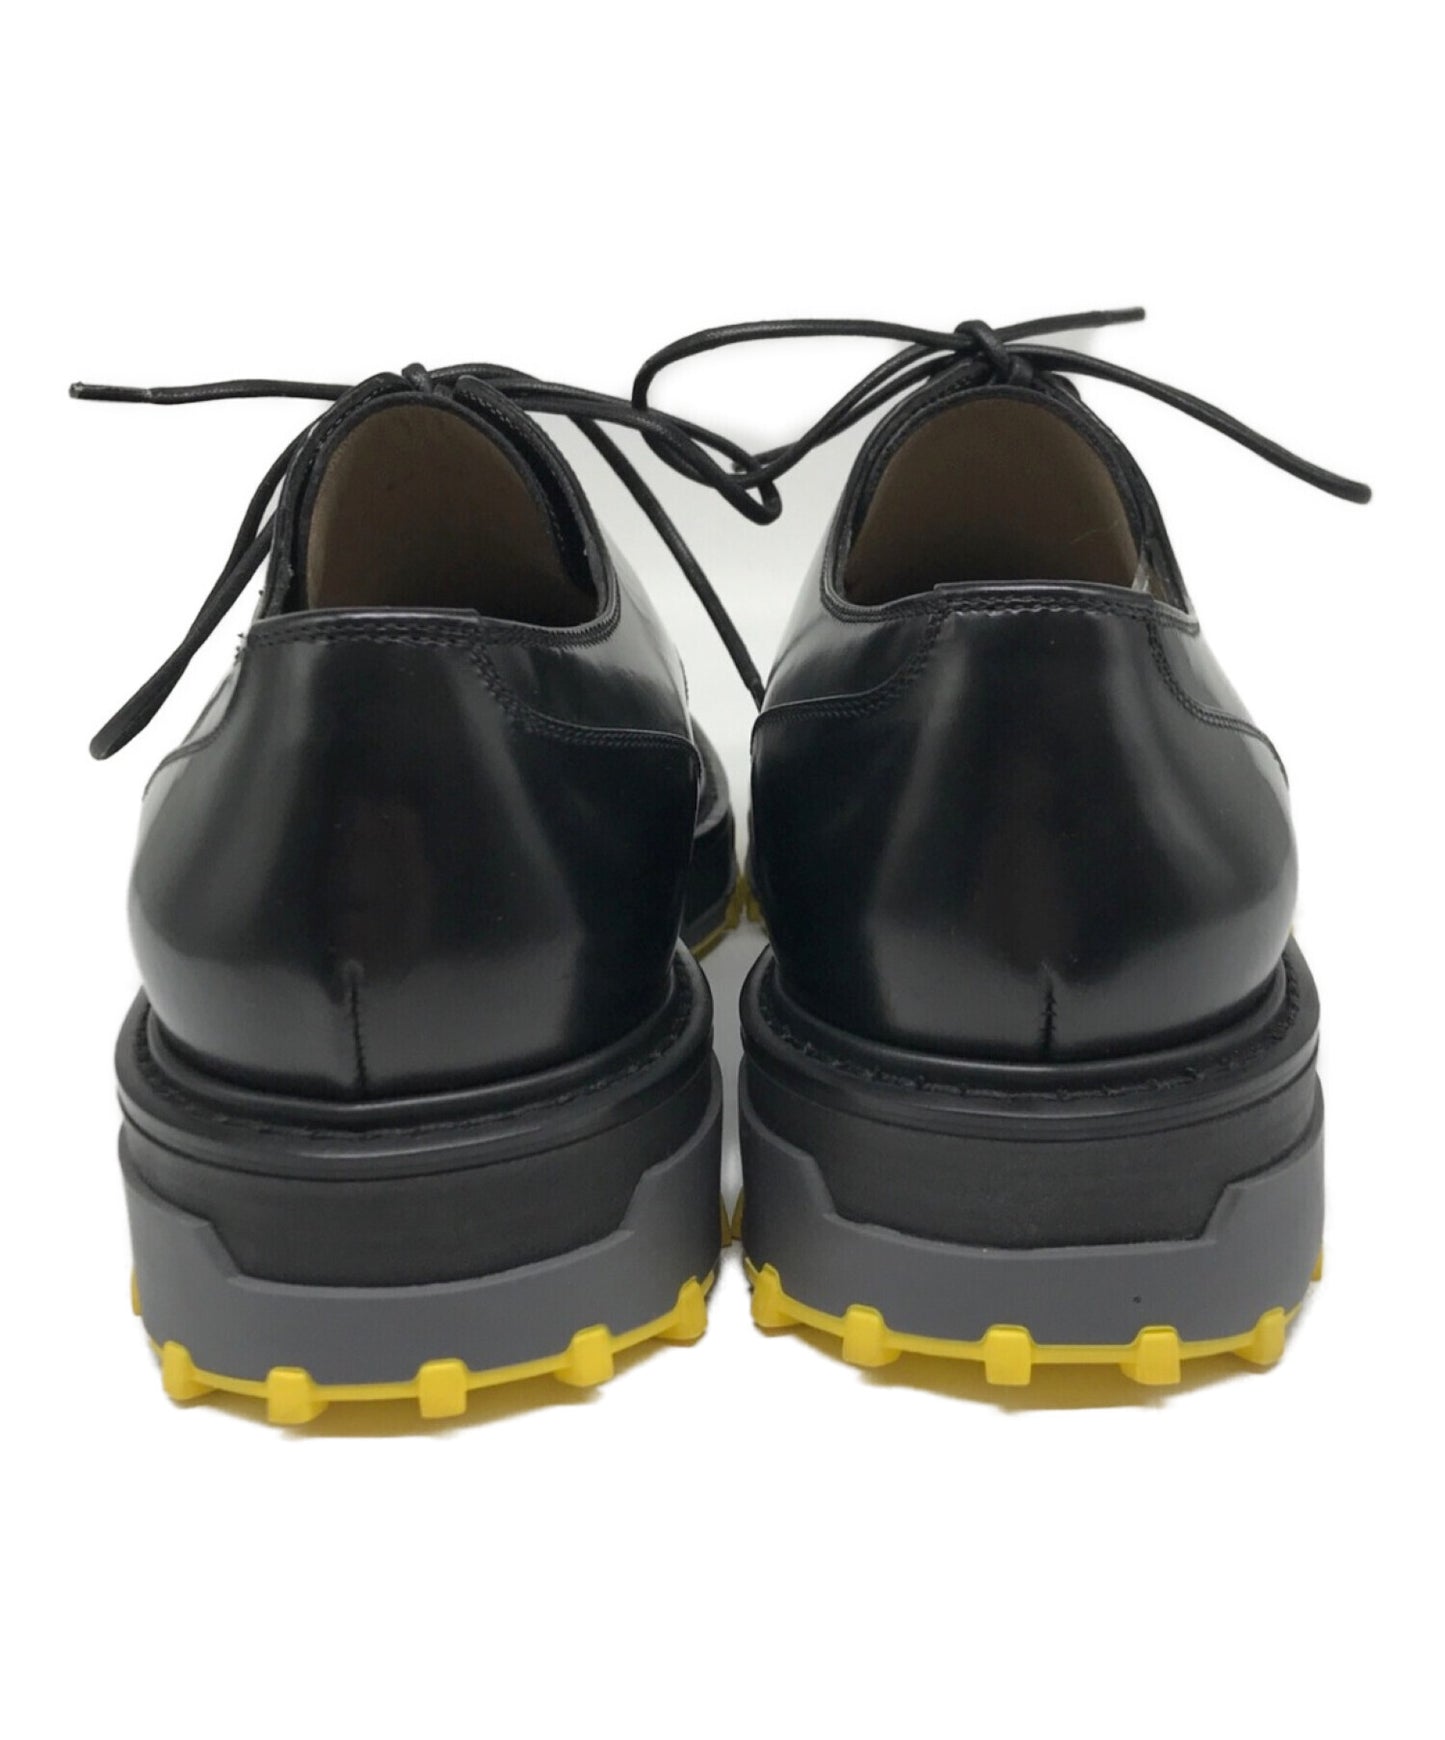 Dior Homme Plain Toe Leather Shoes 15h fr